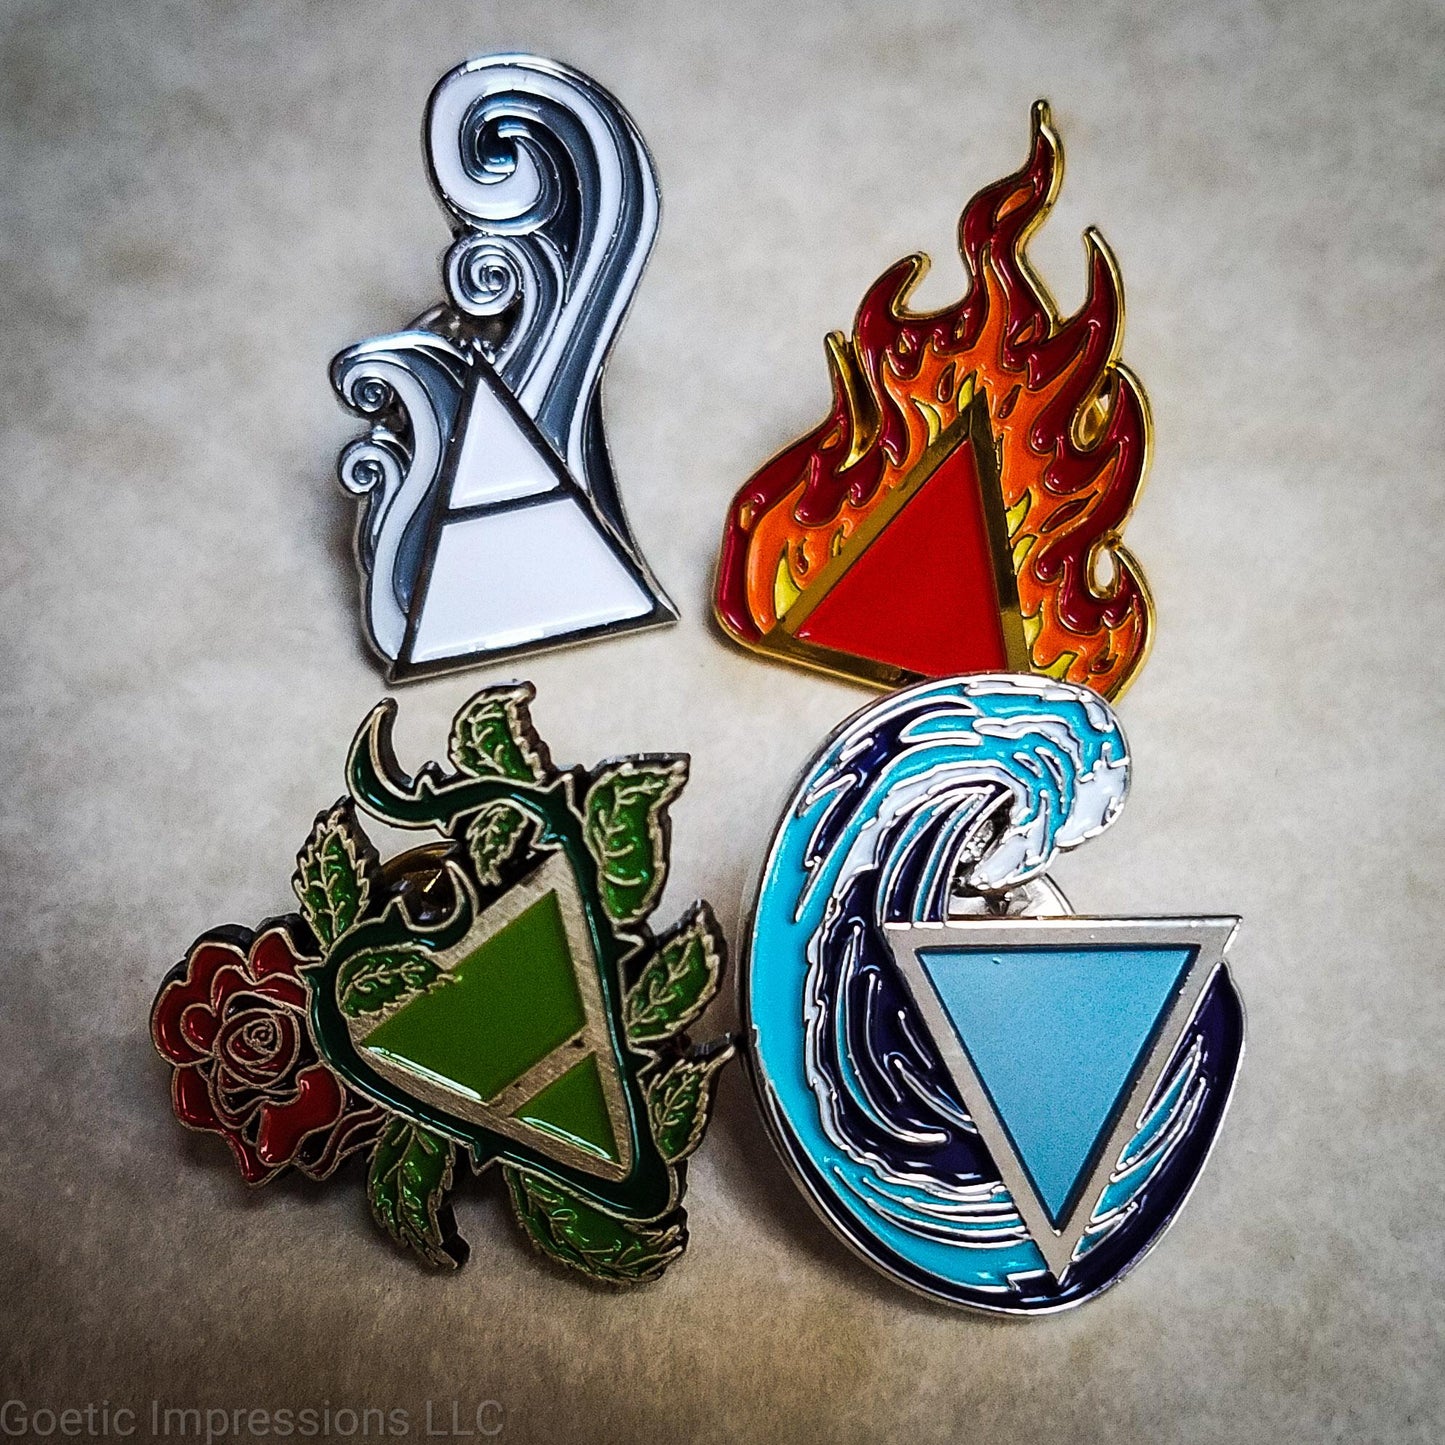 Air, Fire, Earth, Water alchemy symbol pins